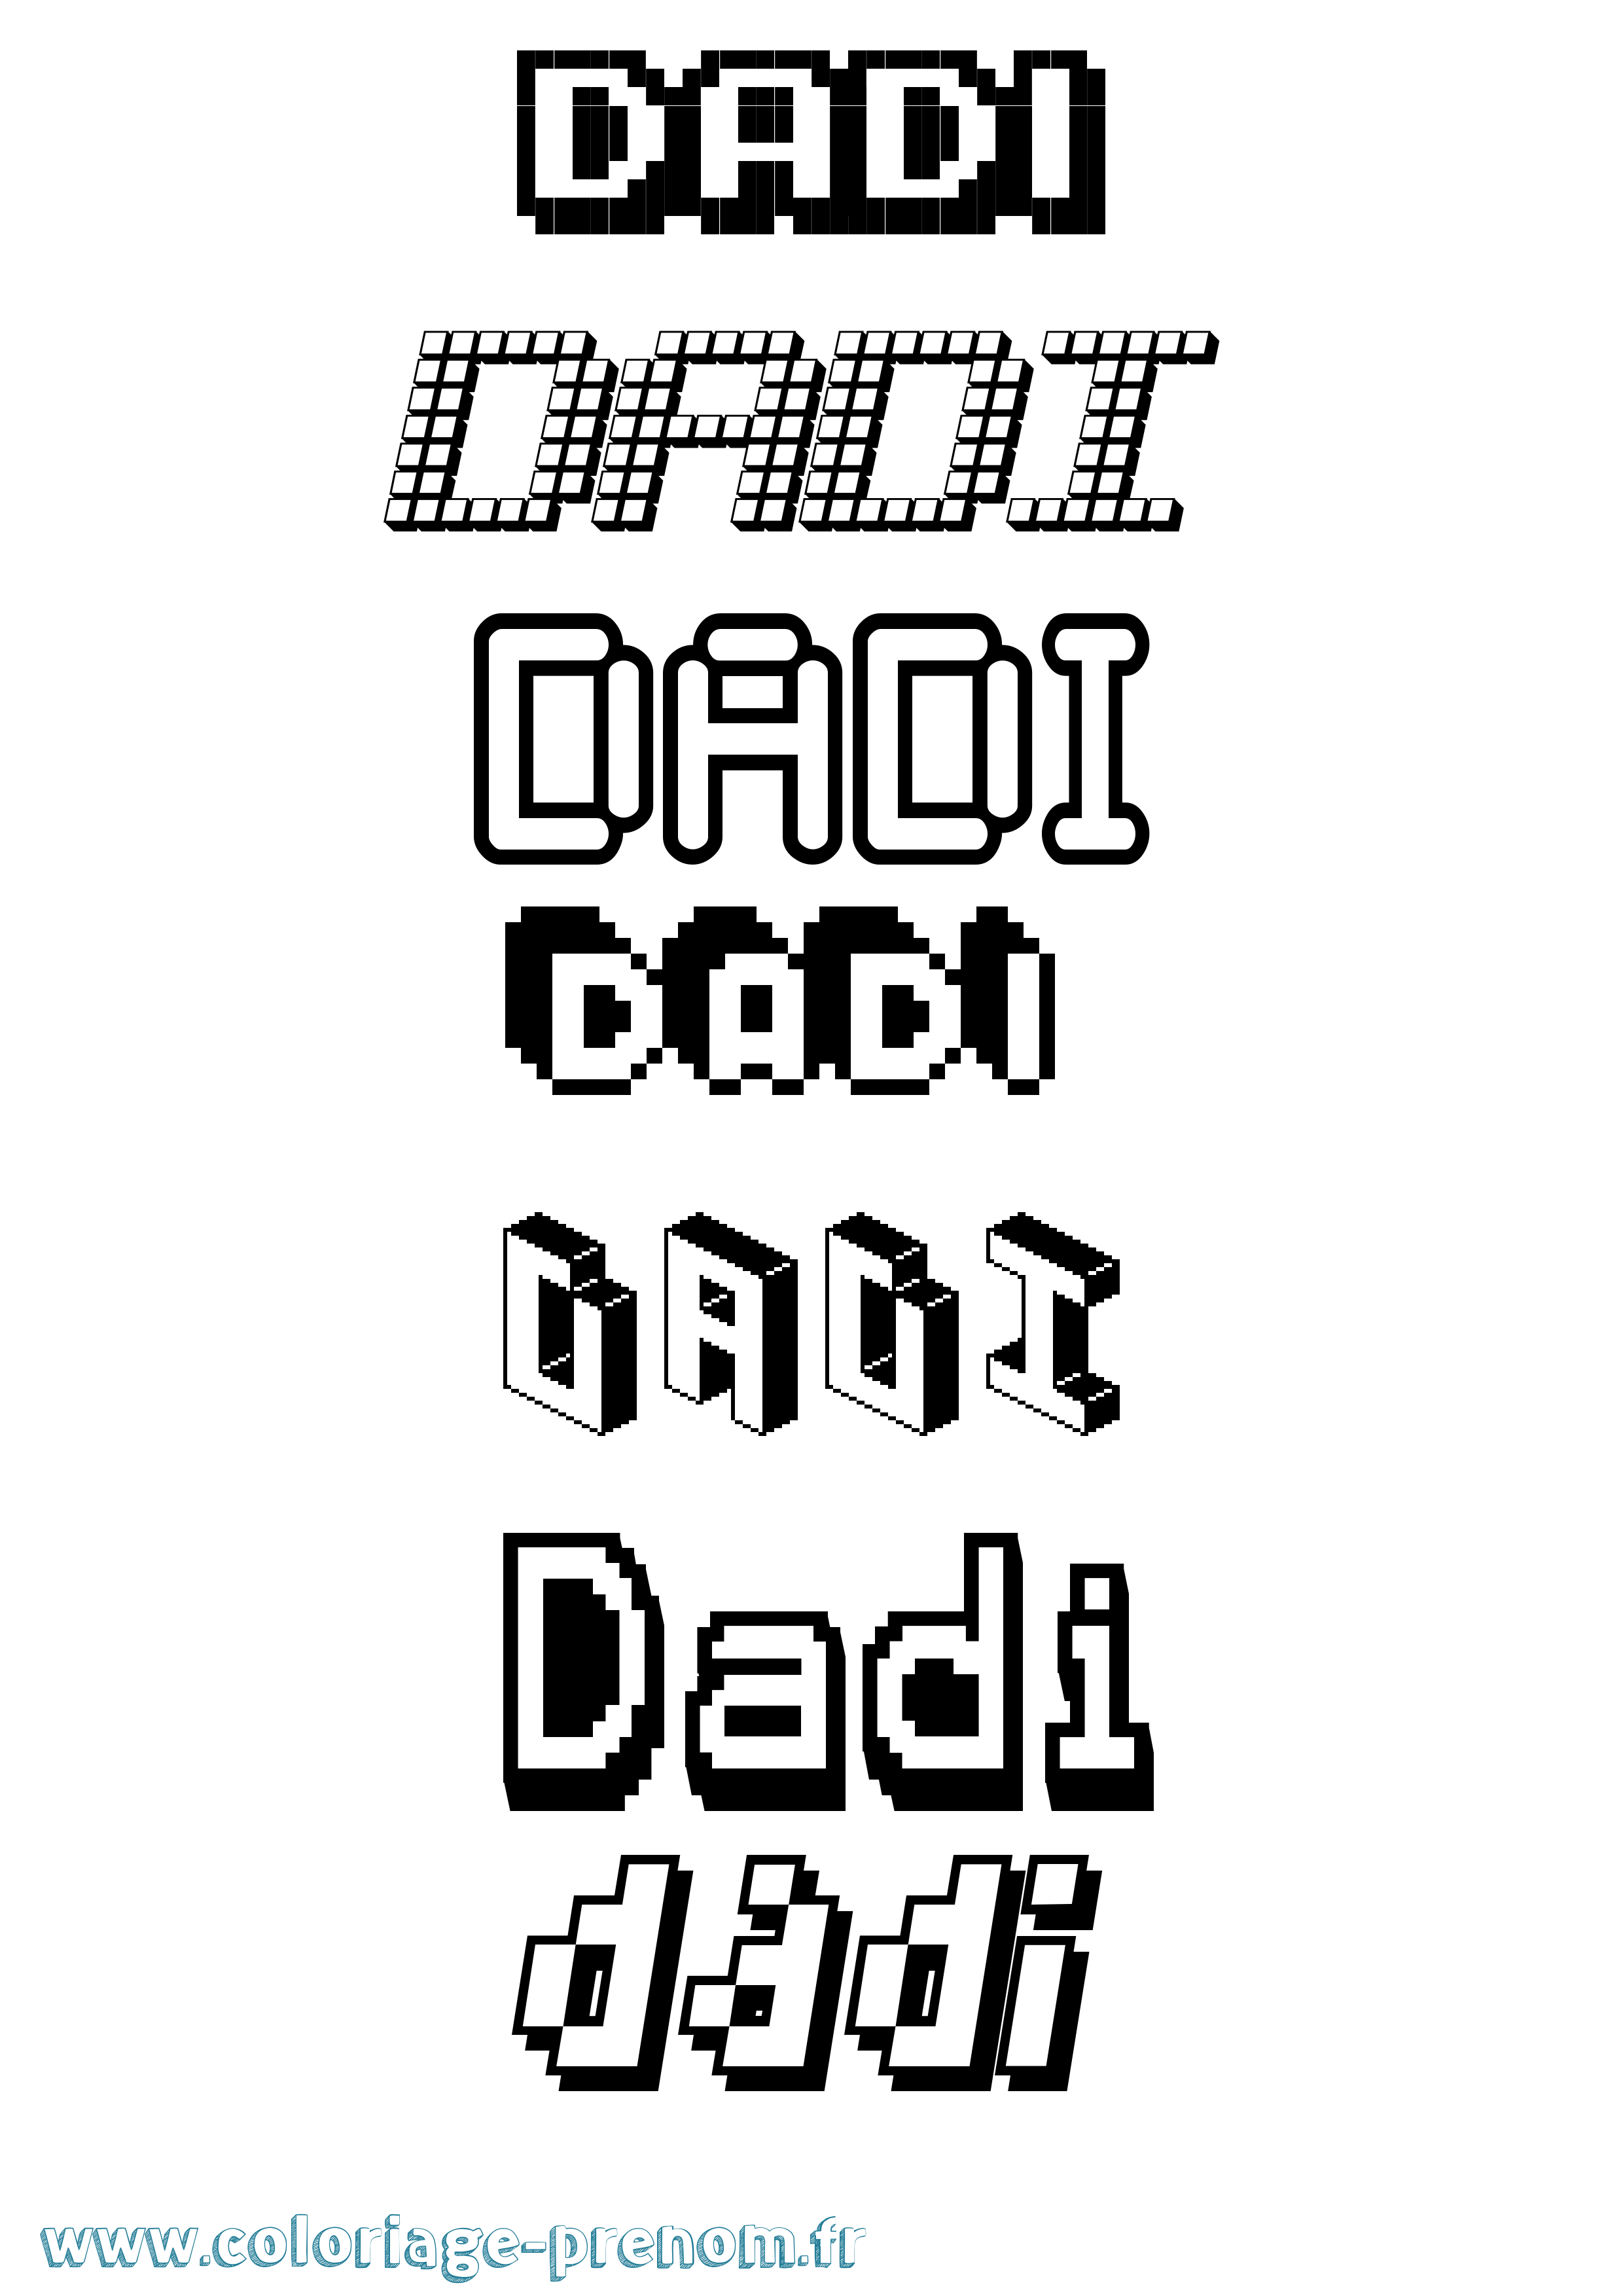 Coloriage prénom Dadi Pixel